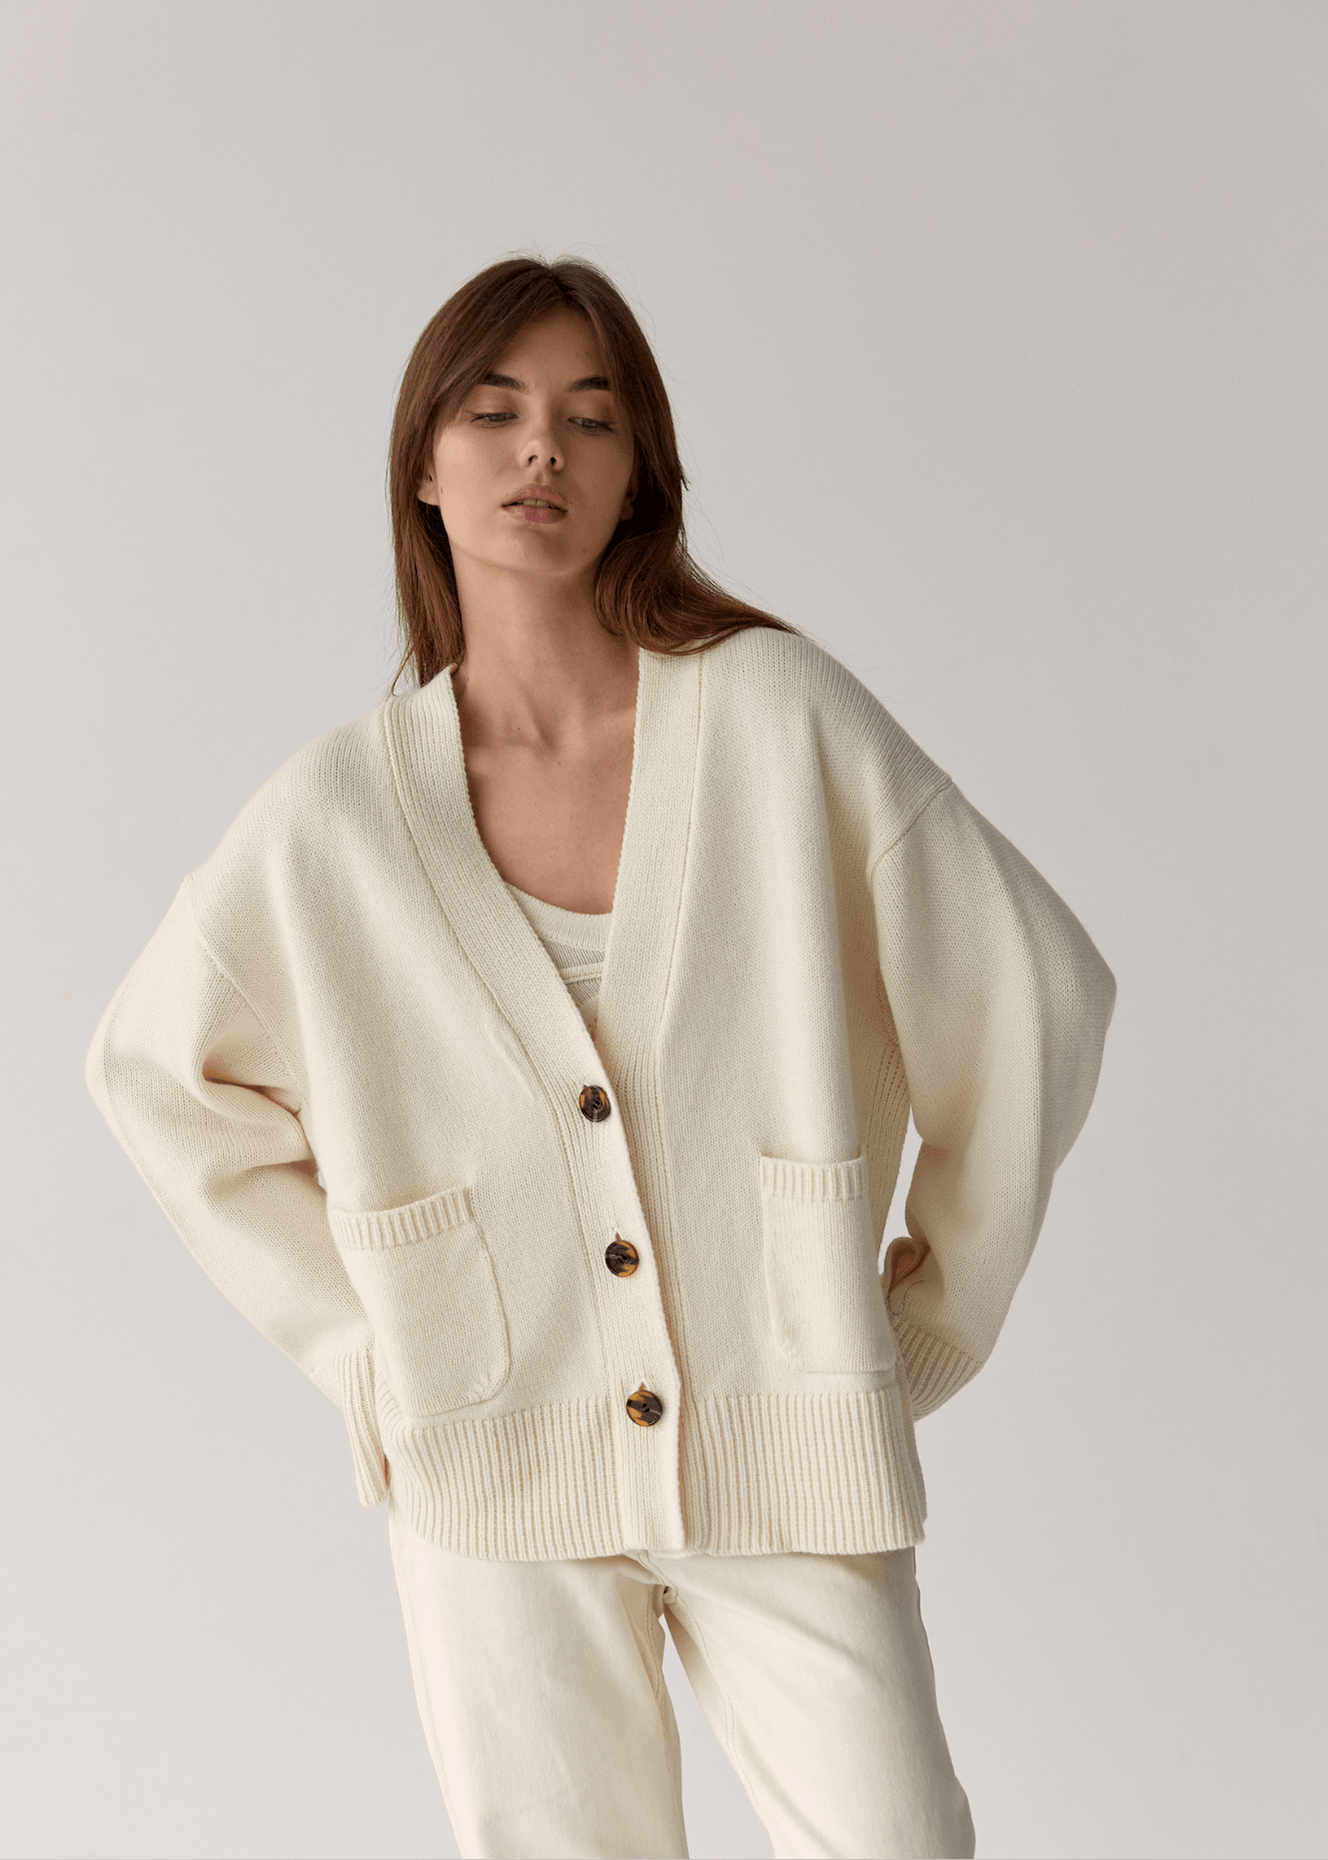 White Cardigan | Luxurious Knitwear | Wool Cardigan 